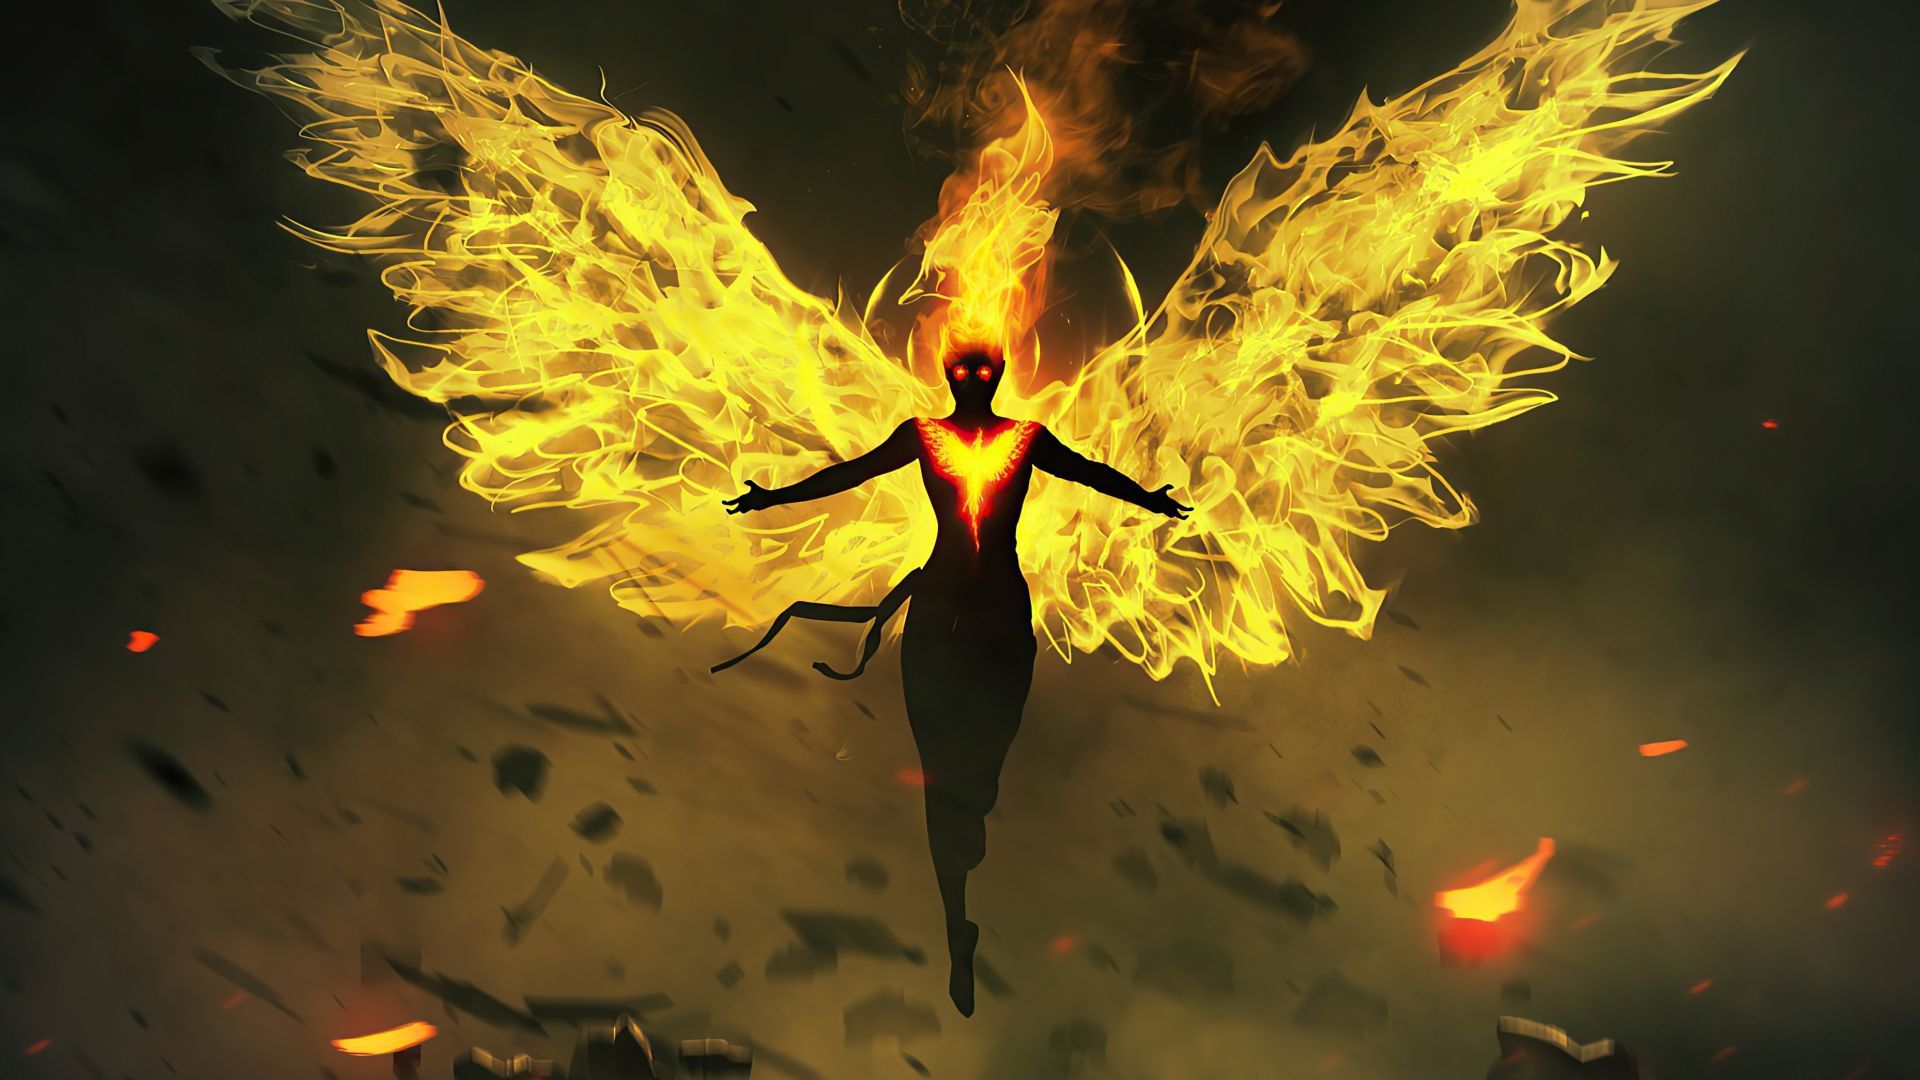 Desktop Wallpaper X Men: Dark Phoenix, Movie, Artwork, HD Image, Picture, Background, Db11e8